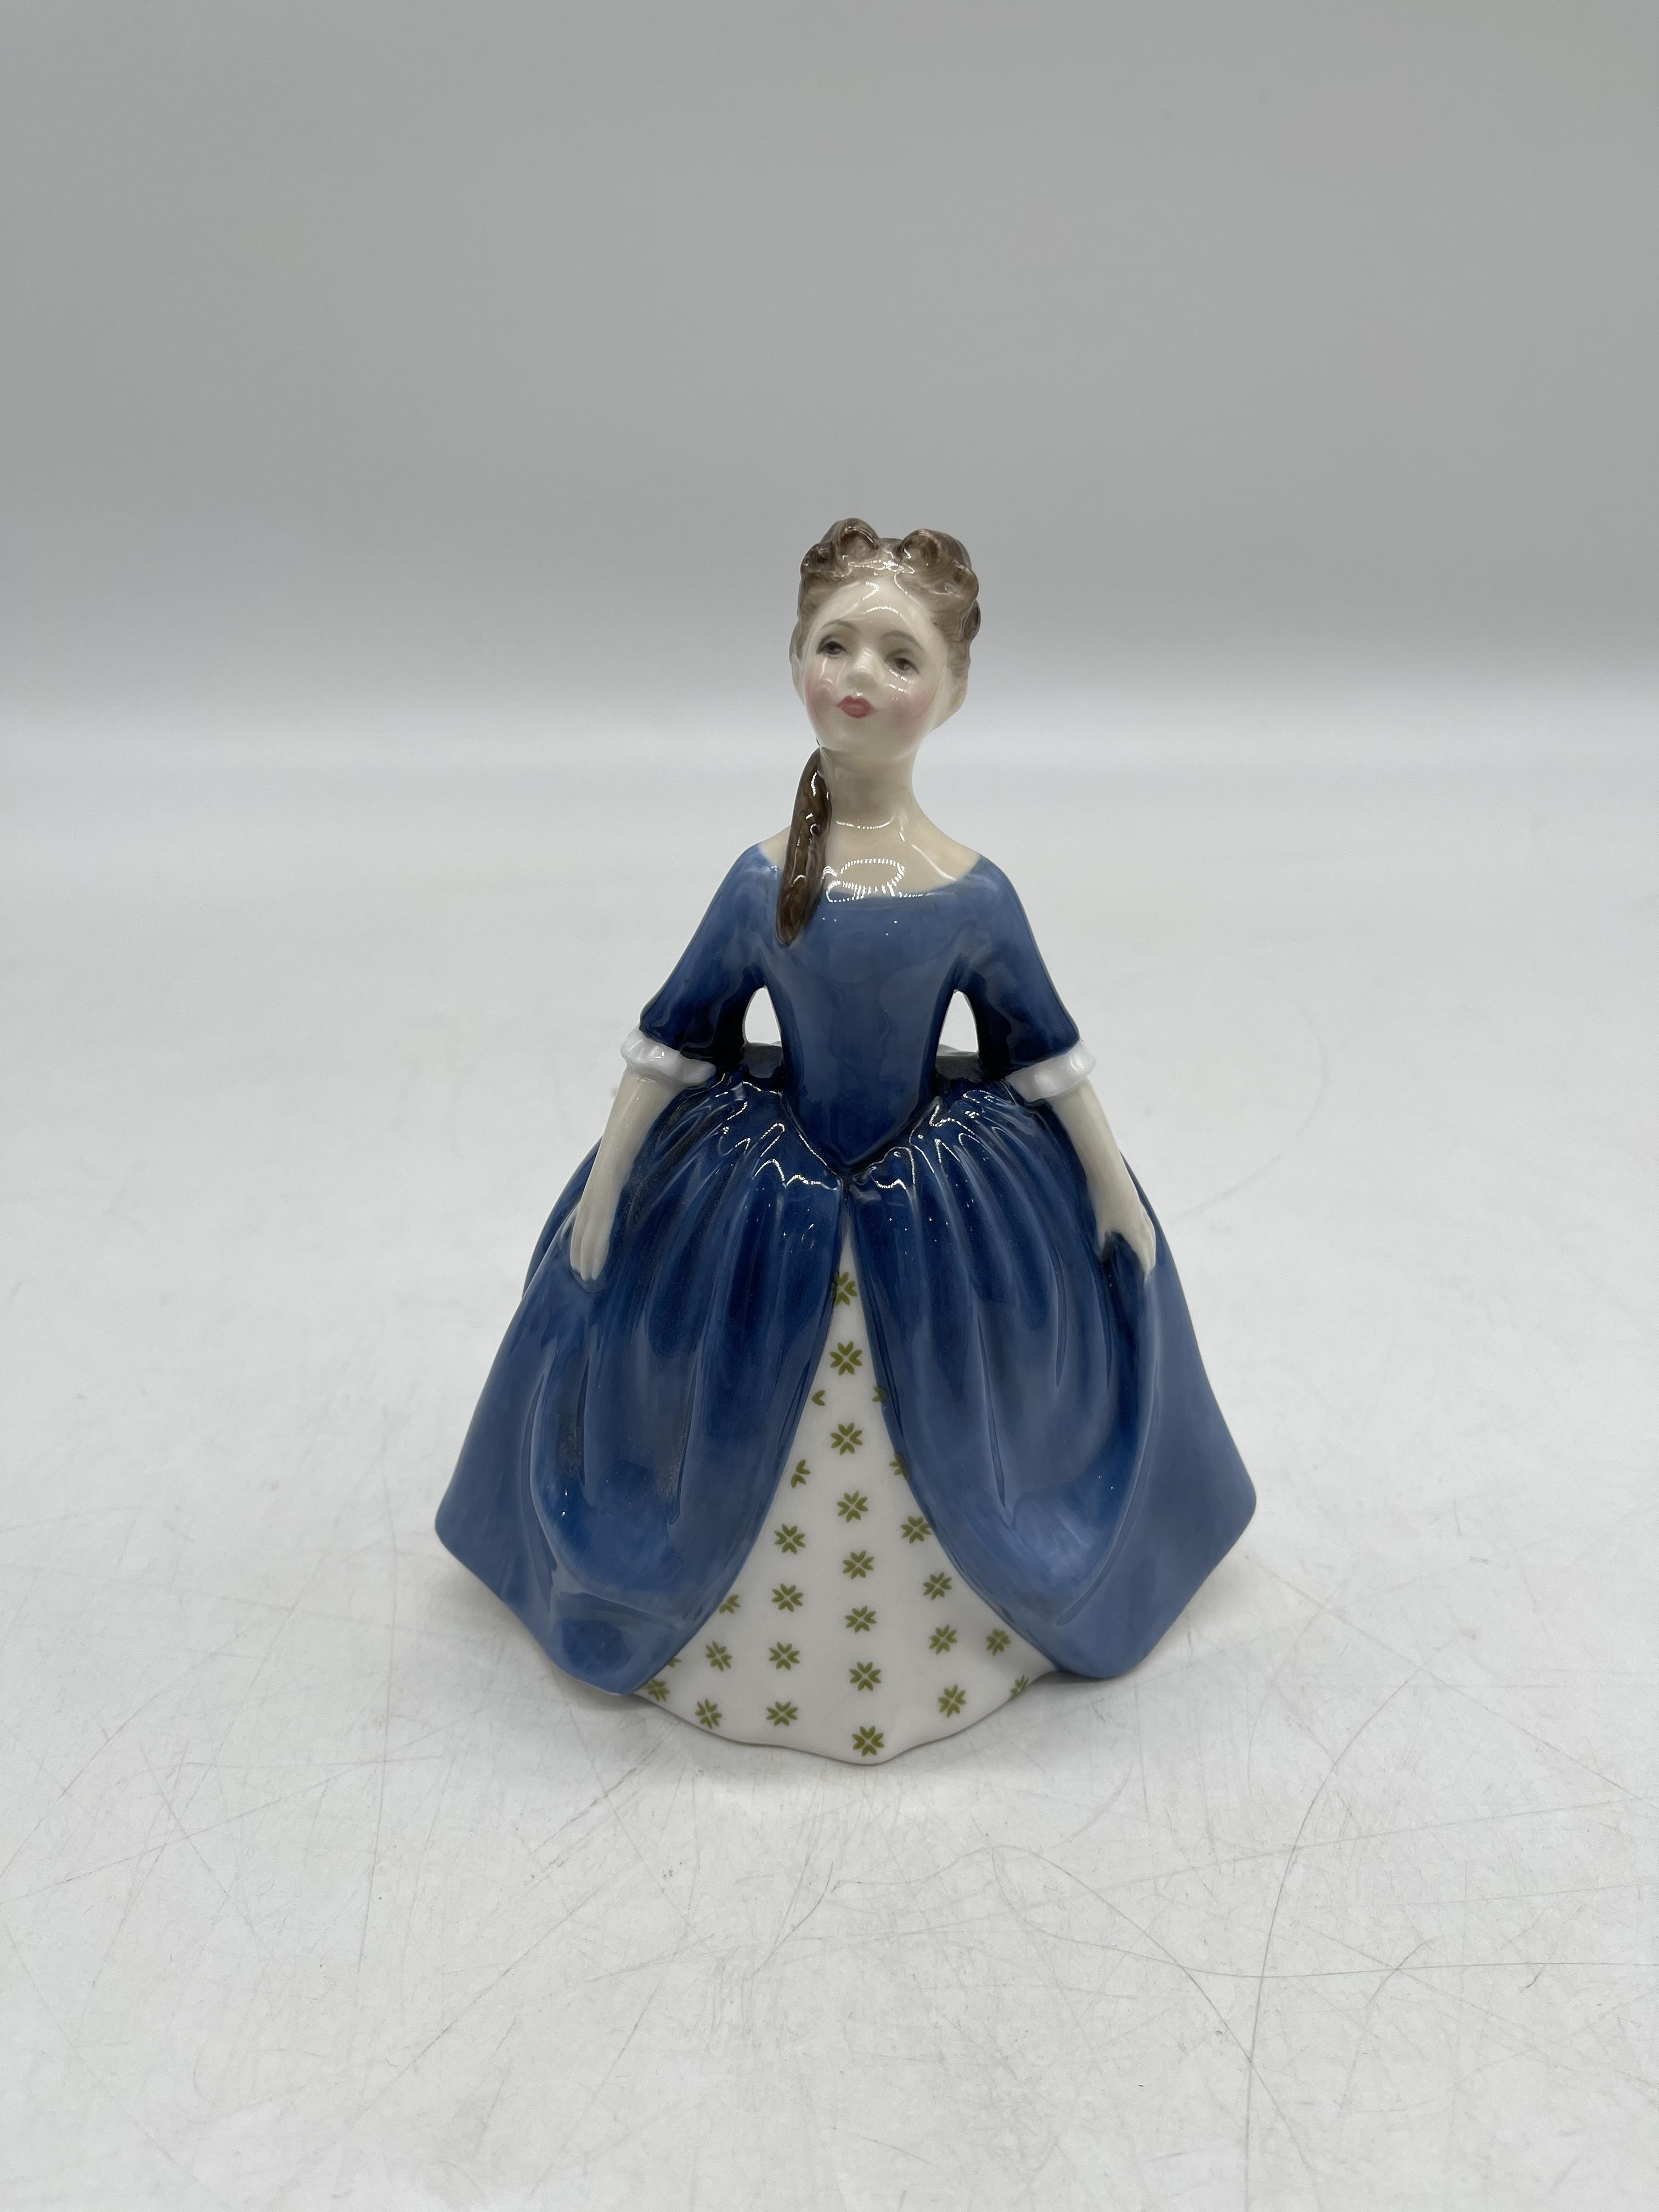 Blue Royal Doulton ceramic figurines - Image 2 of 34